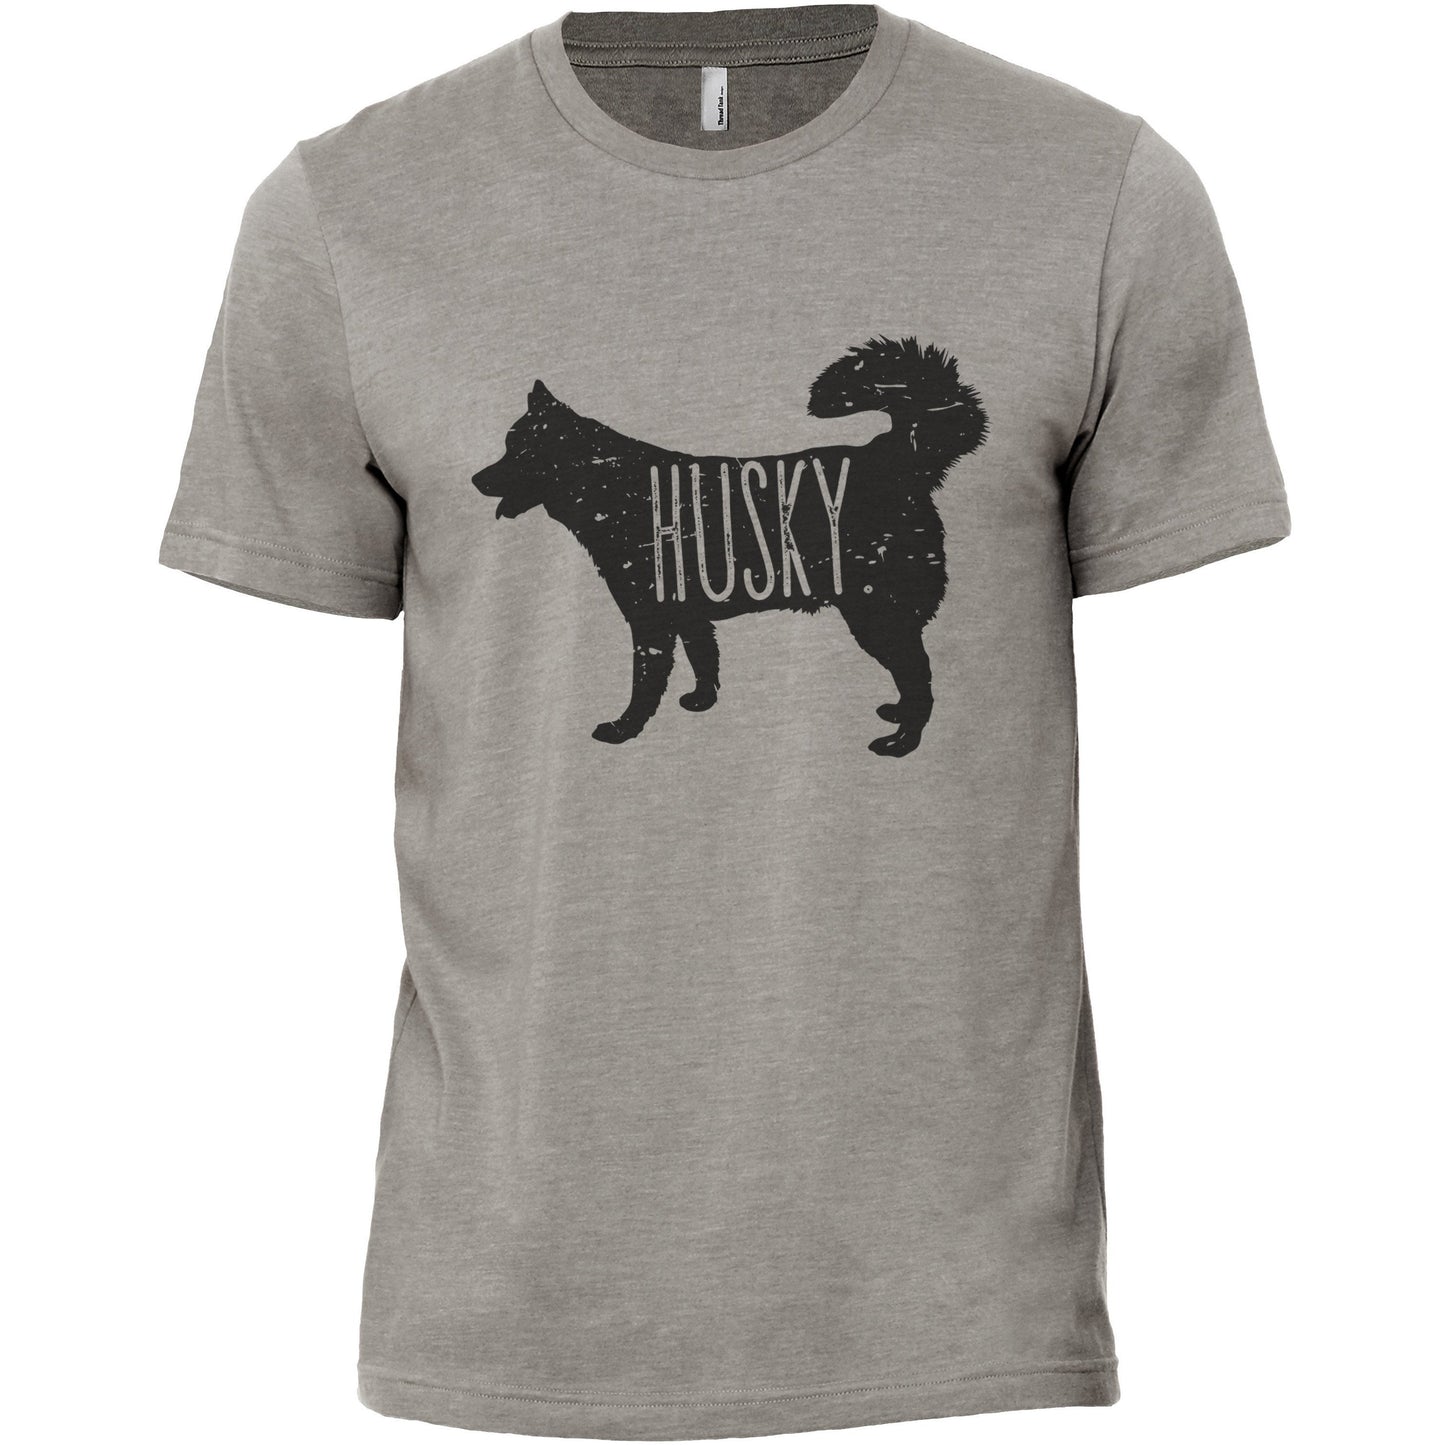 Husky Dog Silhouette Military Grey Printed Graphic Men's Crew T-Shirt Tee